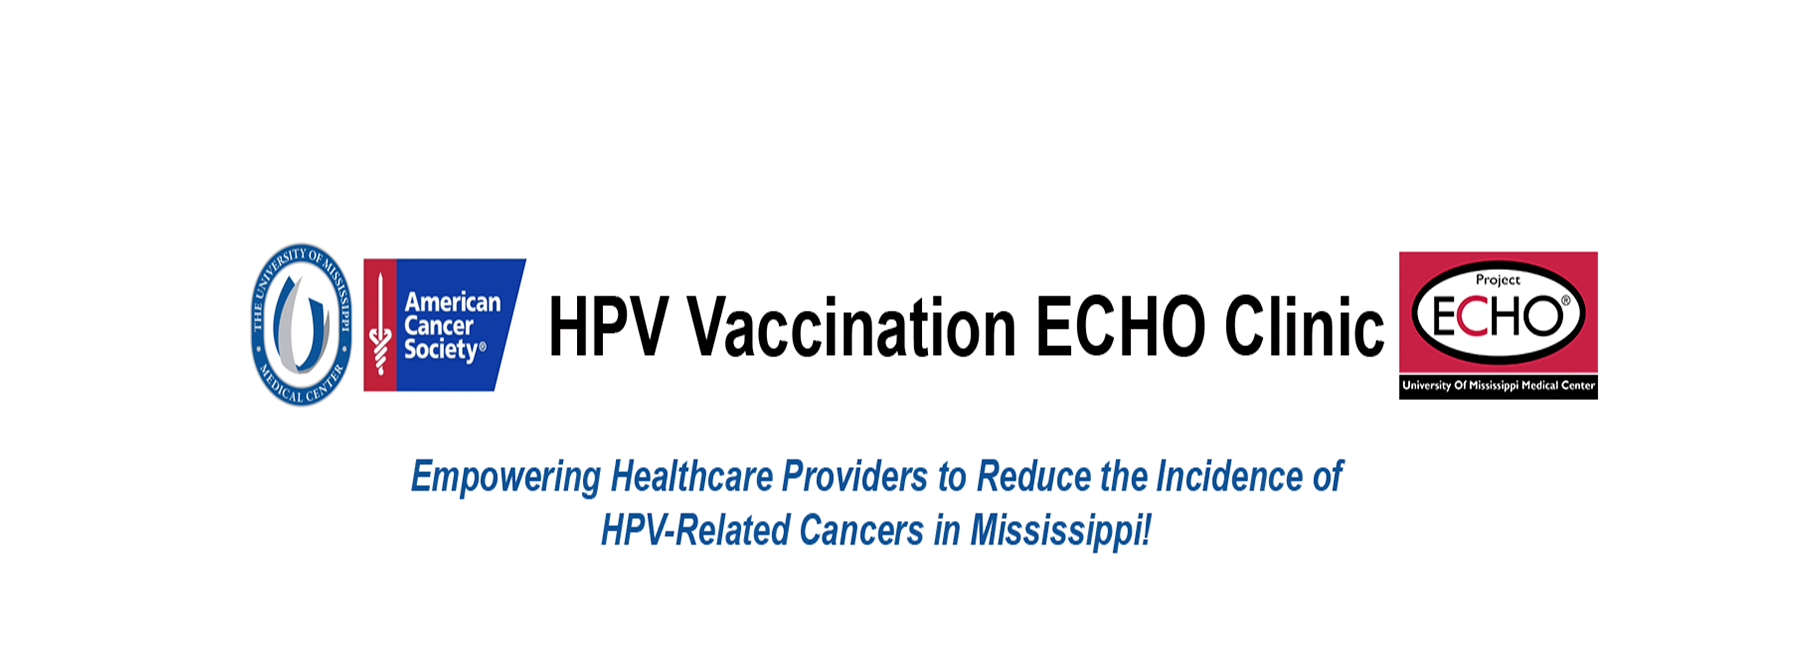 UMMC-ACS HPV Vaccination ECHO Clinic